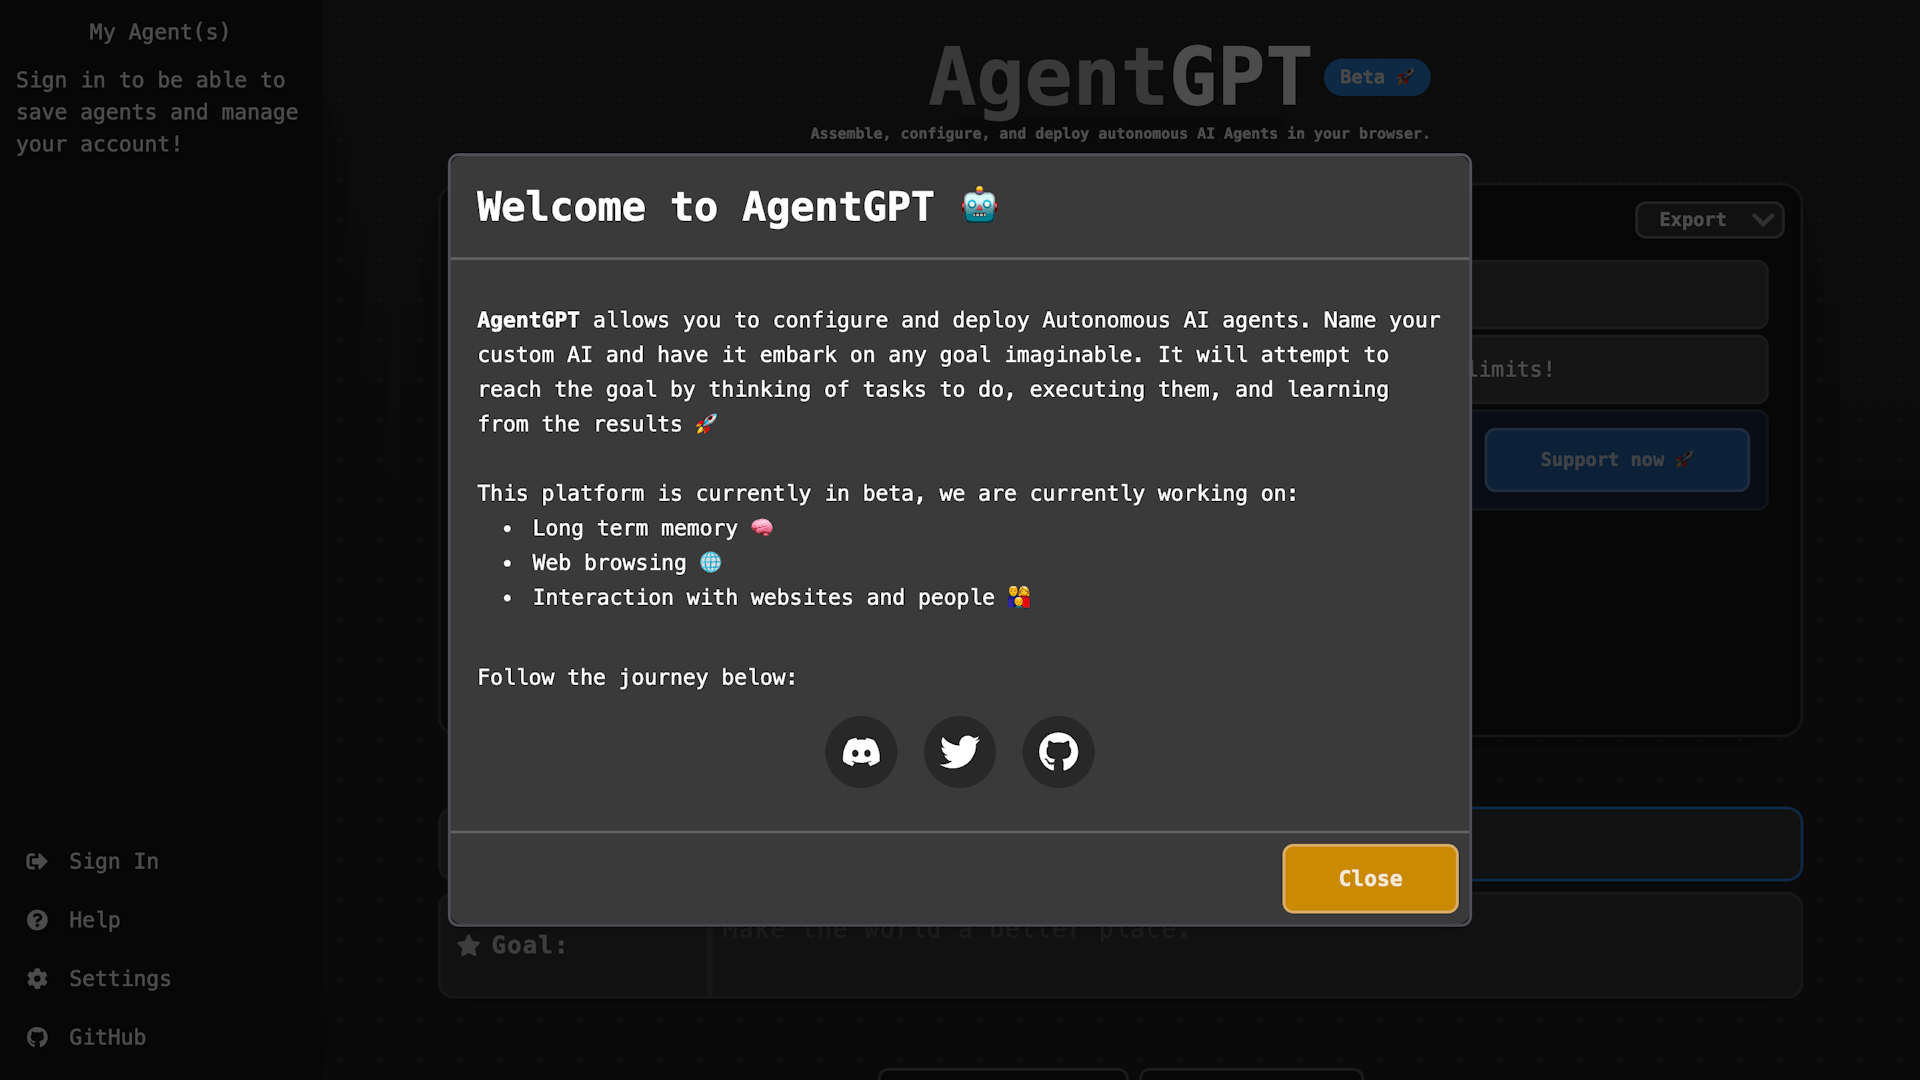 AgentGPT